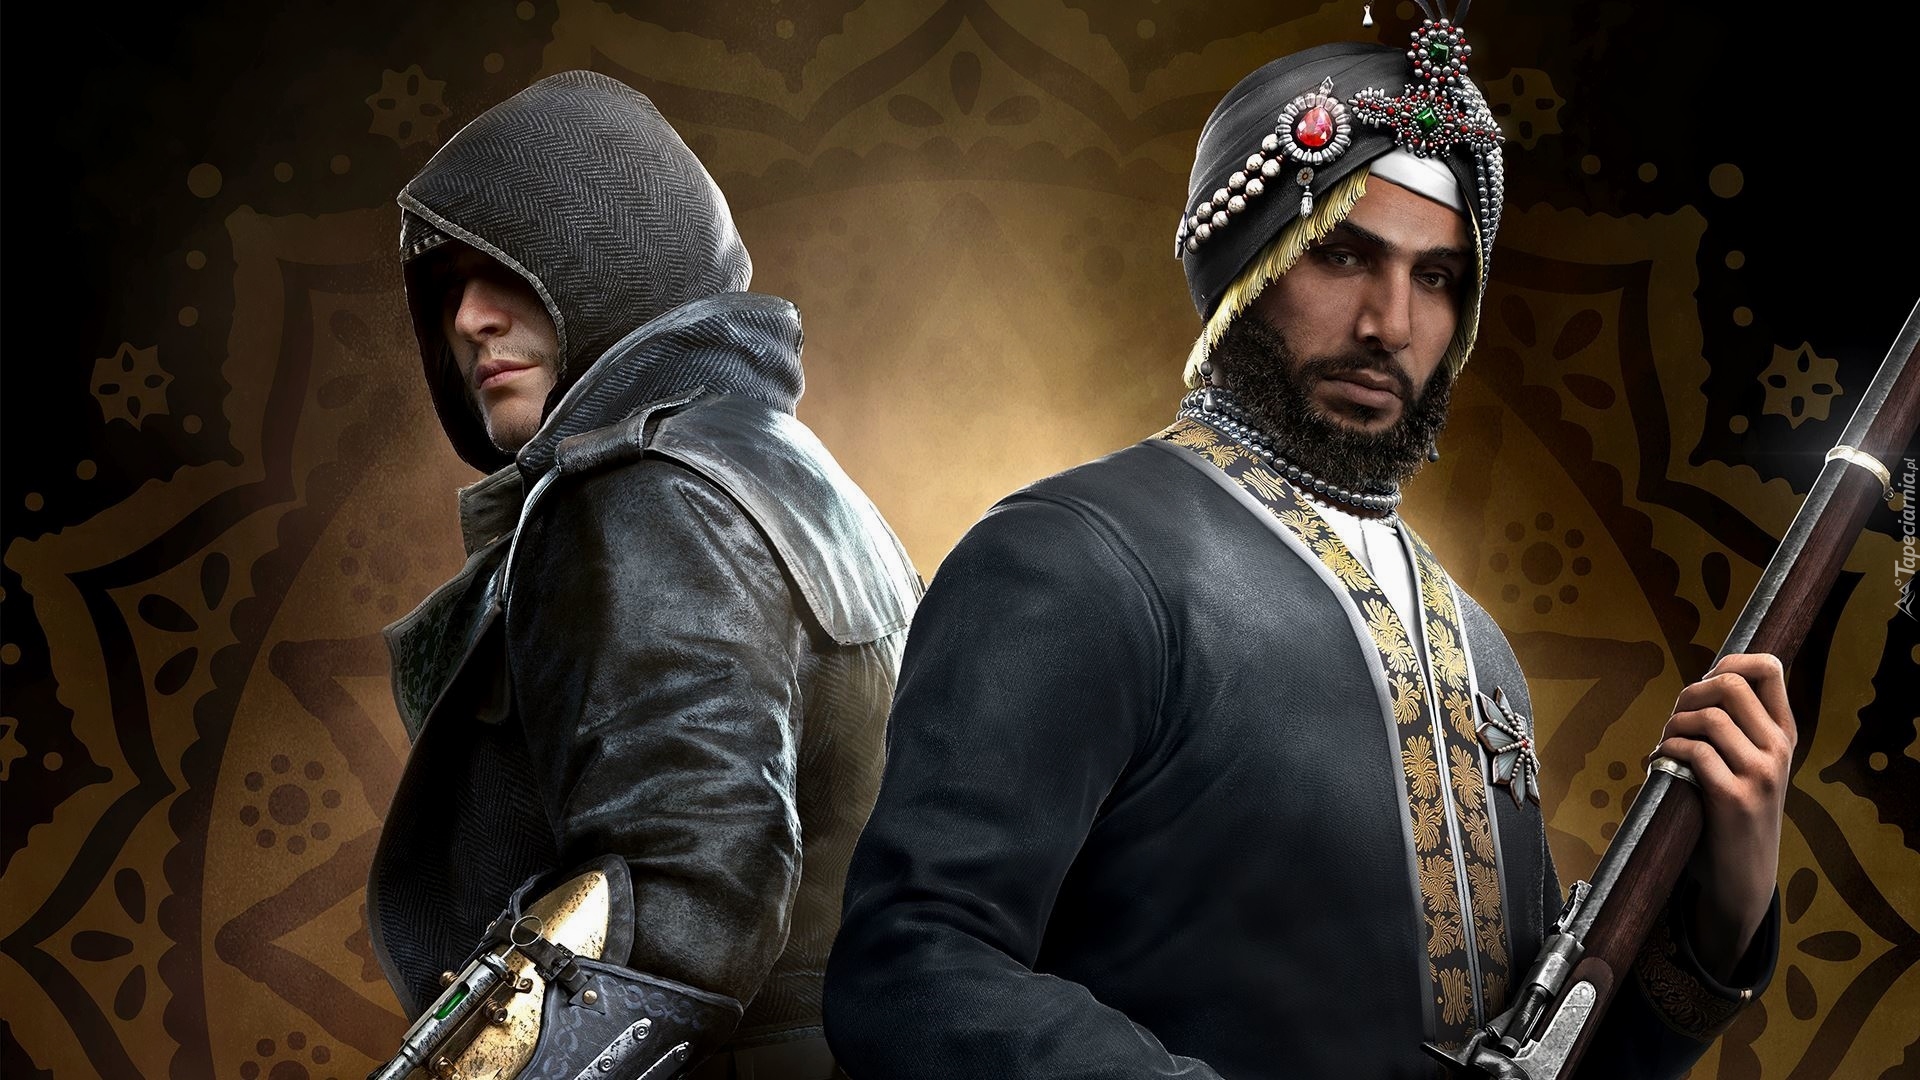 Assassins Creed Syndicate - The Last Maharaja Missions Pack, Dodatek, Ostatni Maharadża, Jacob Frye, Duleep Singh